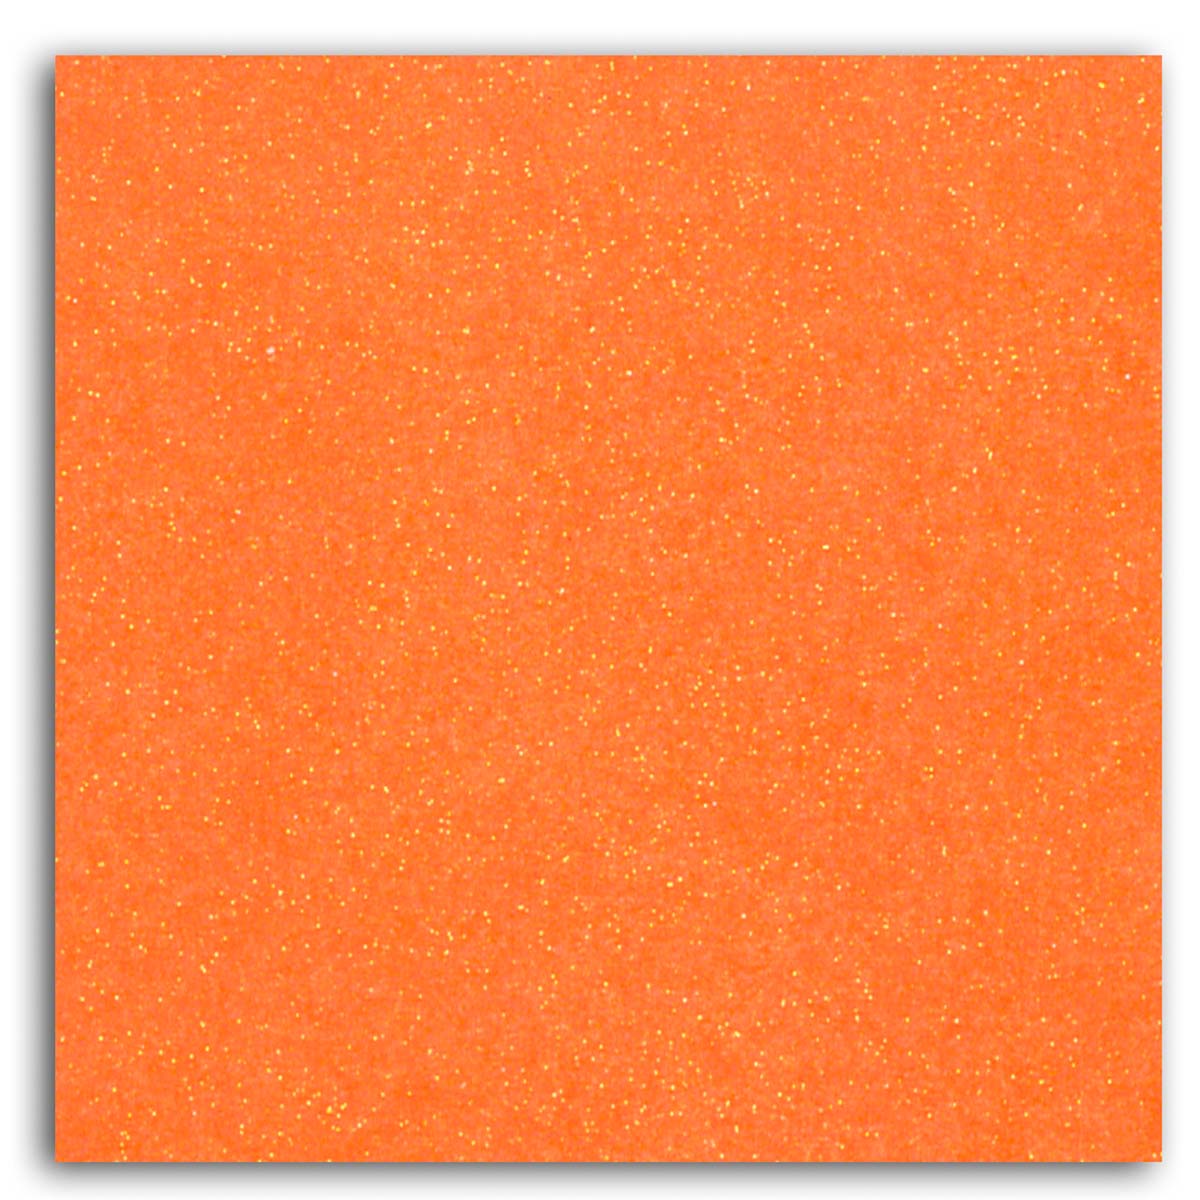 Tissu pailleté thermocollant - orange fluo